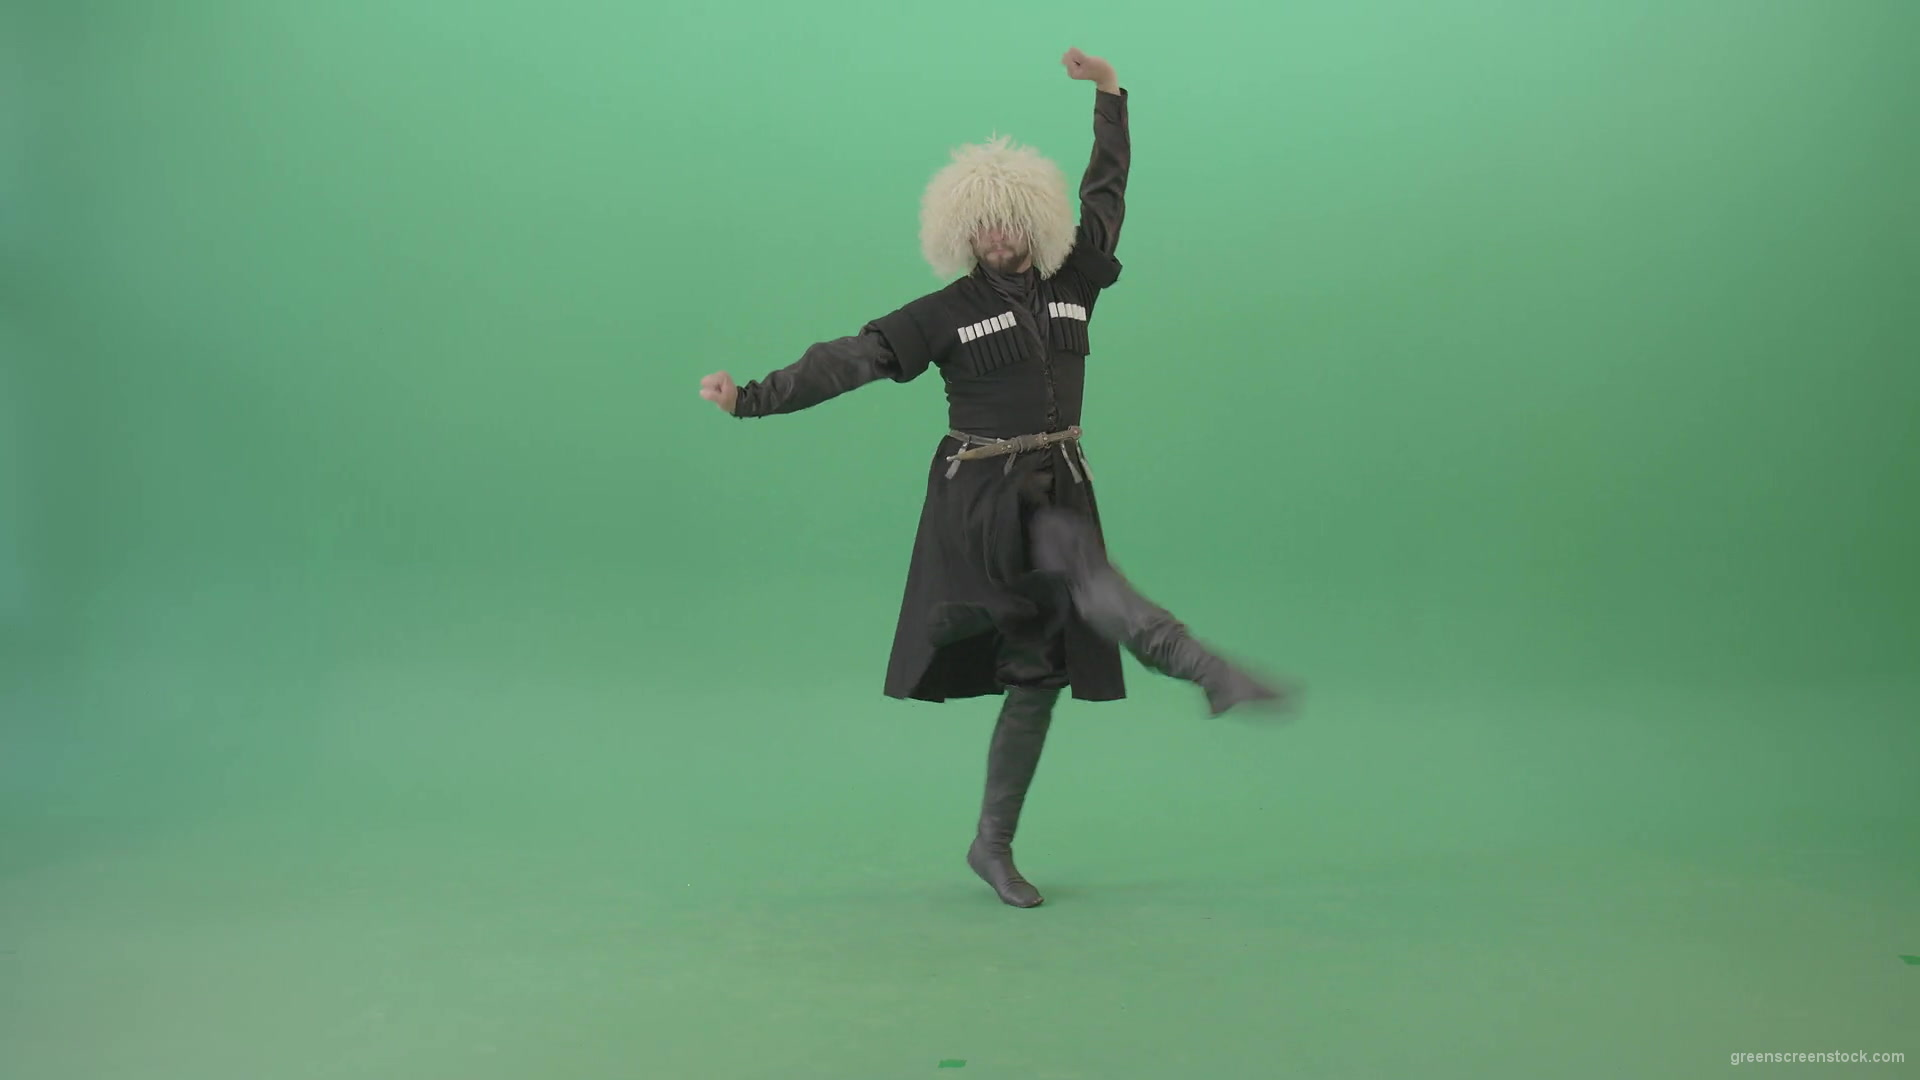 Caucasian-Man-jumping-on-one-leg-in-folk-traditional-Georgia-Dance-on-Green-Screen-4K-Video-Footage-1920_004 Green Screen Stock